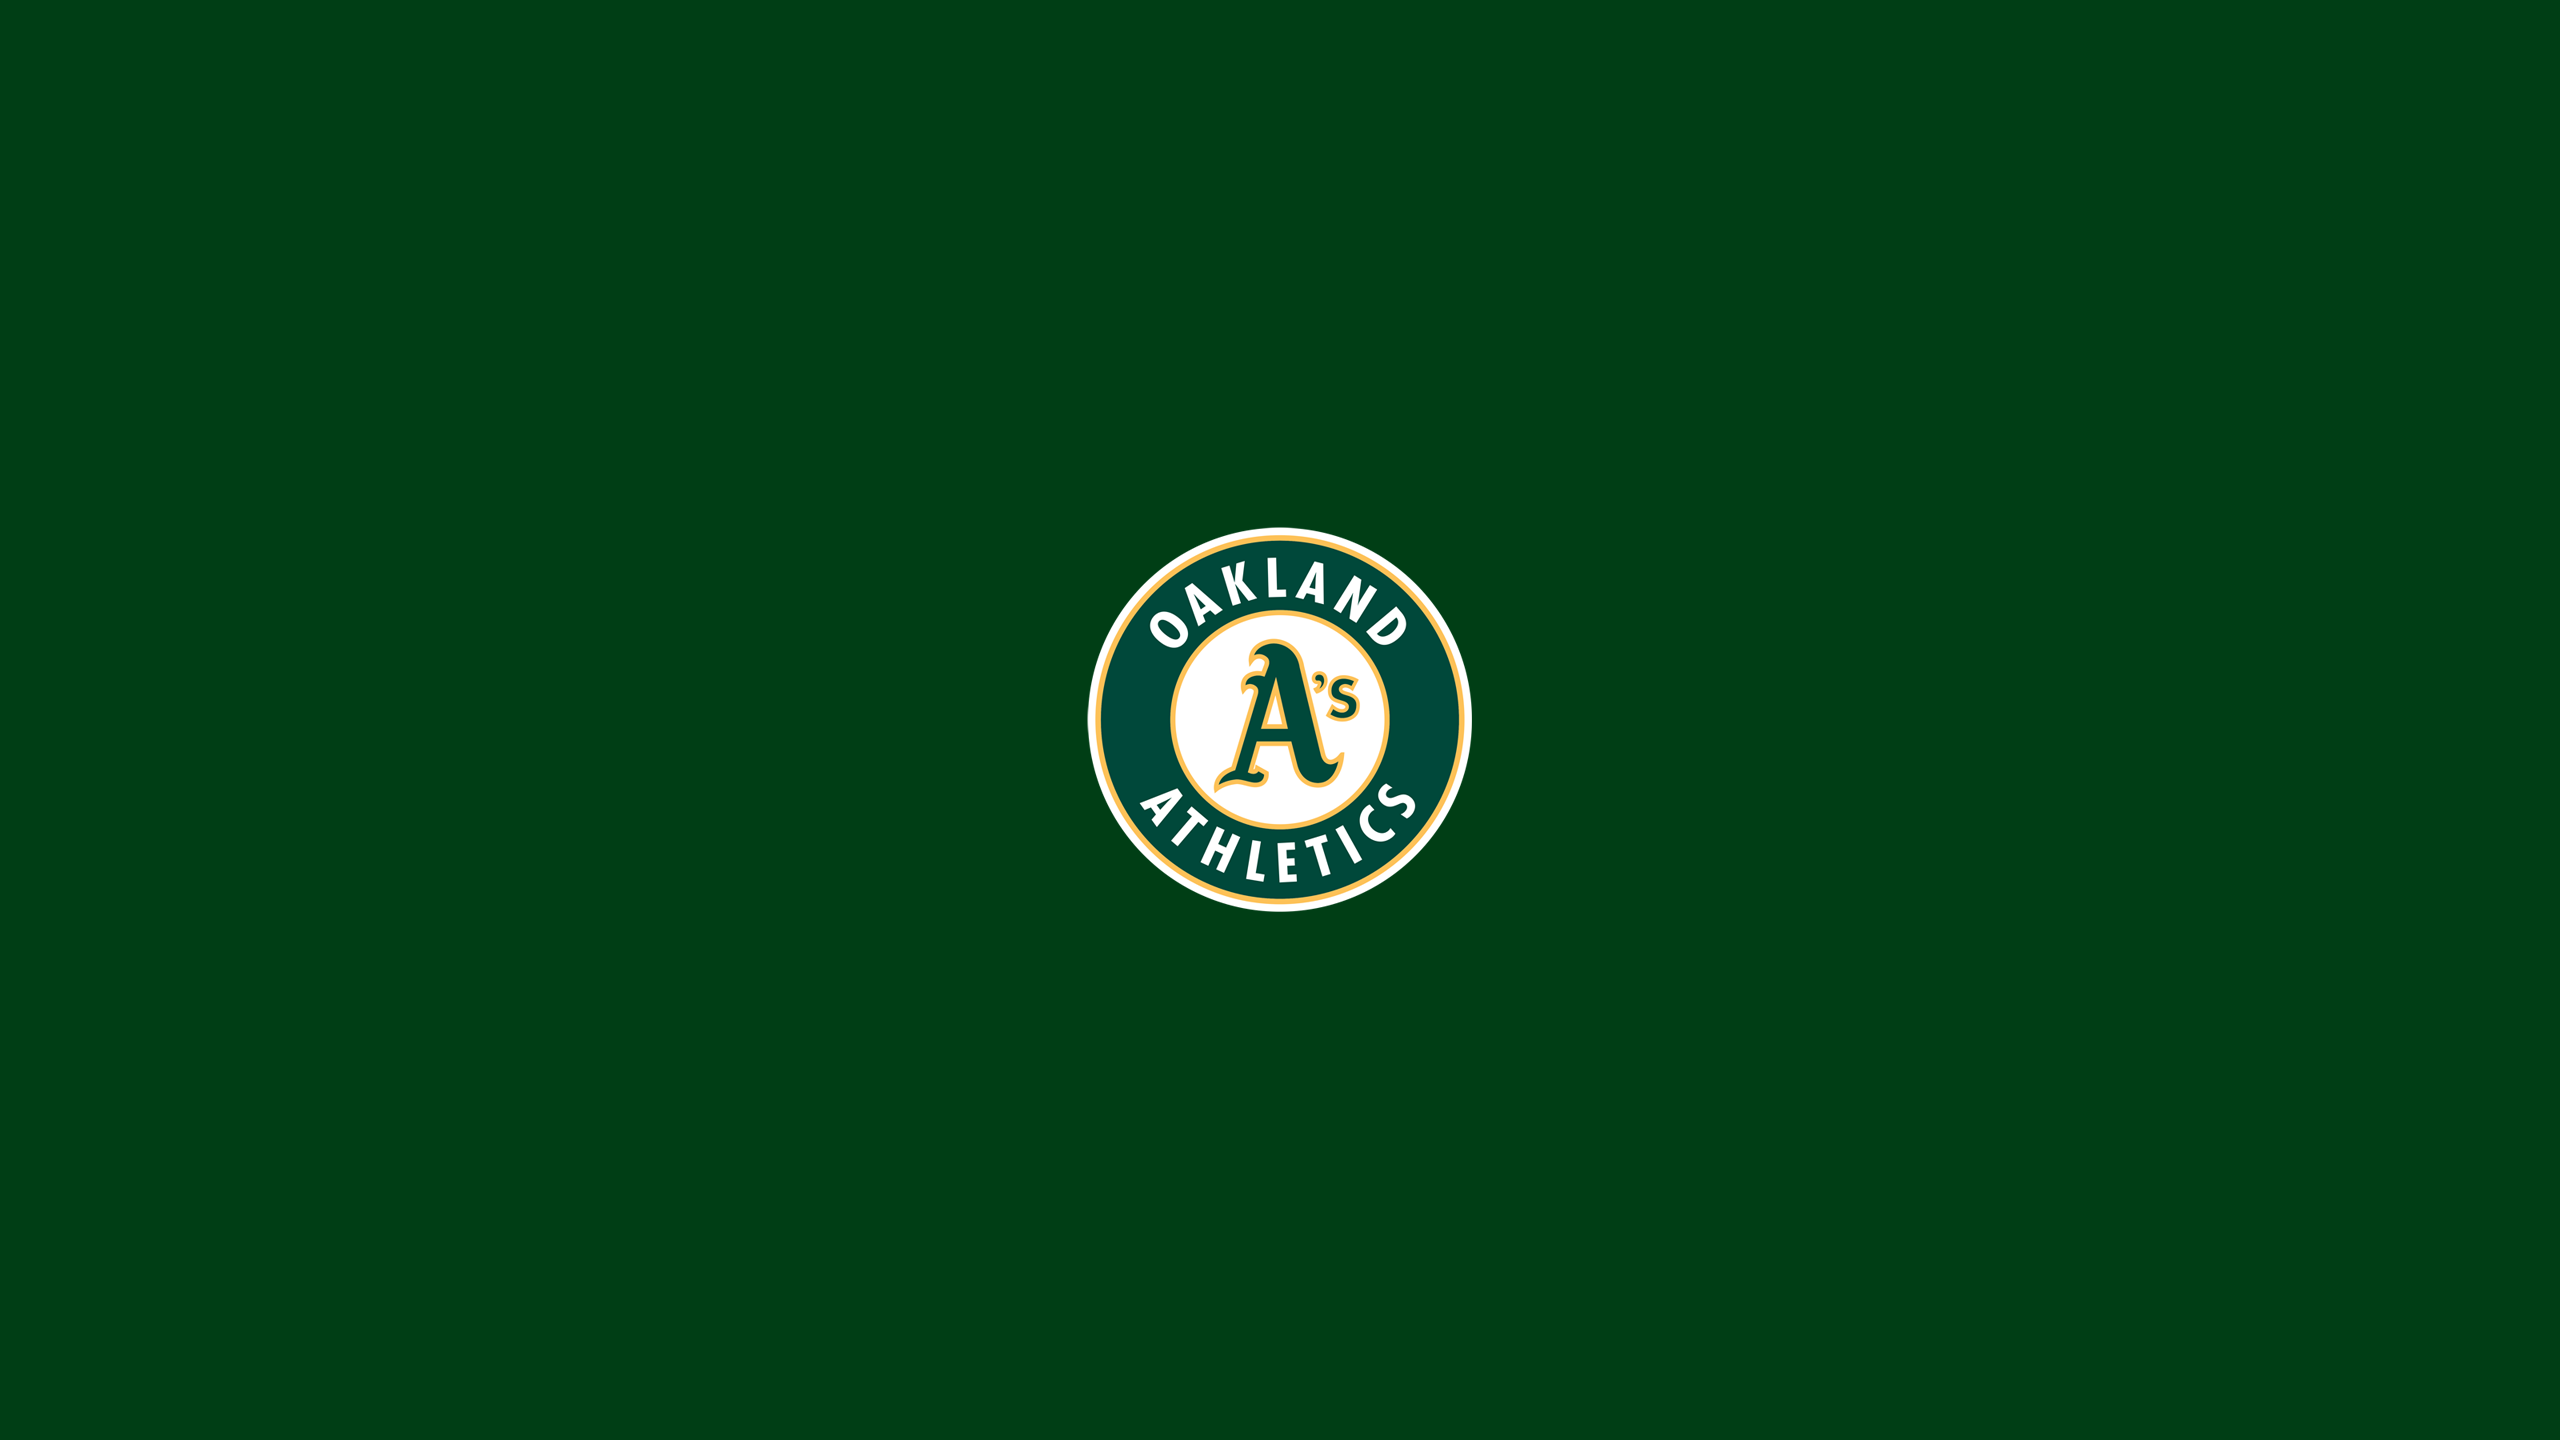 Oakland Athletics - MLB - Square Bettor